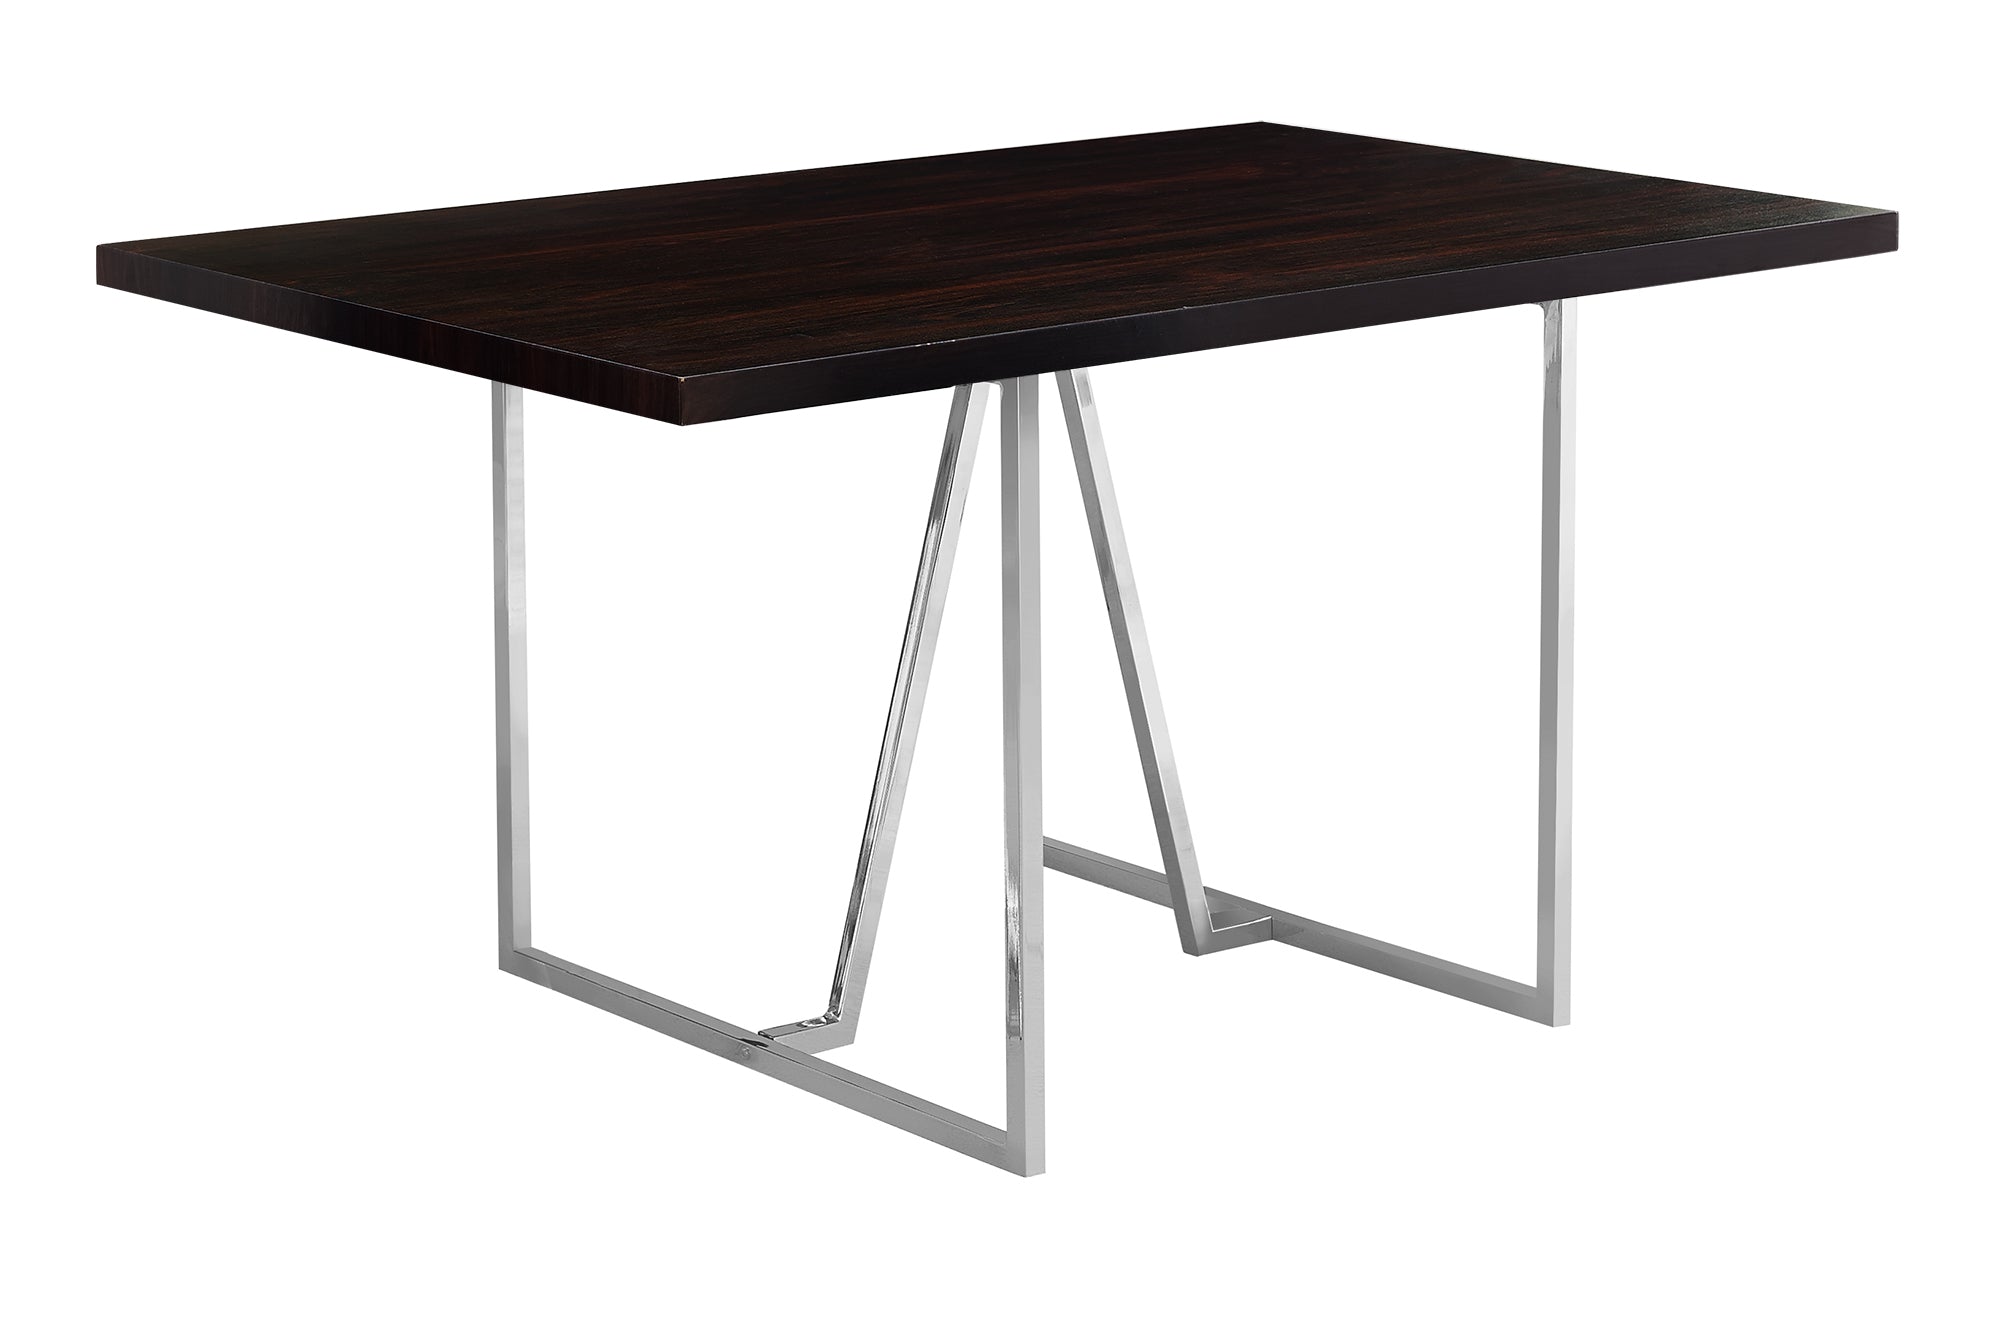 MN-311064    Dining Table, 60" Rectangular, Metal, Kitchen, Dining Room, Metal Legs, Laminate, Dark Brown, Chrome, Contemporary, Modern